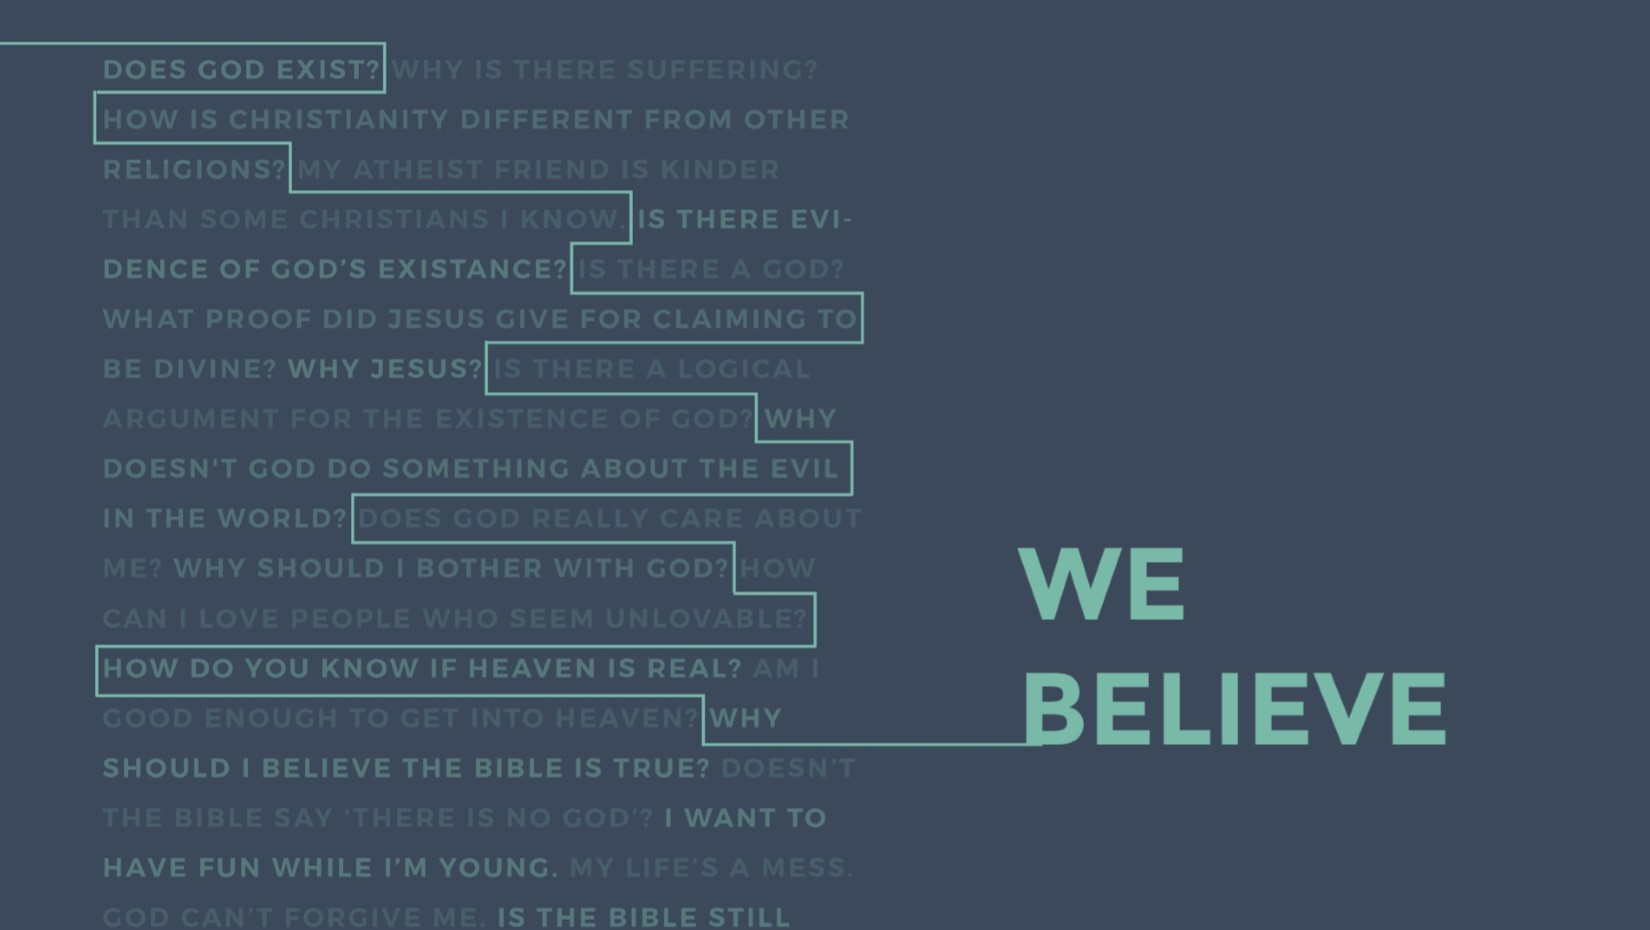 01 31 2021 We Believe: The Church